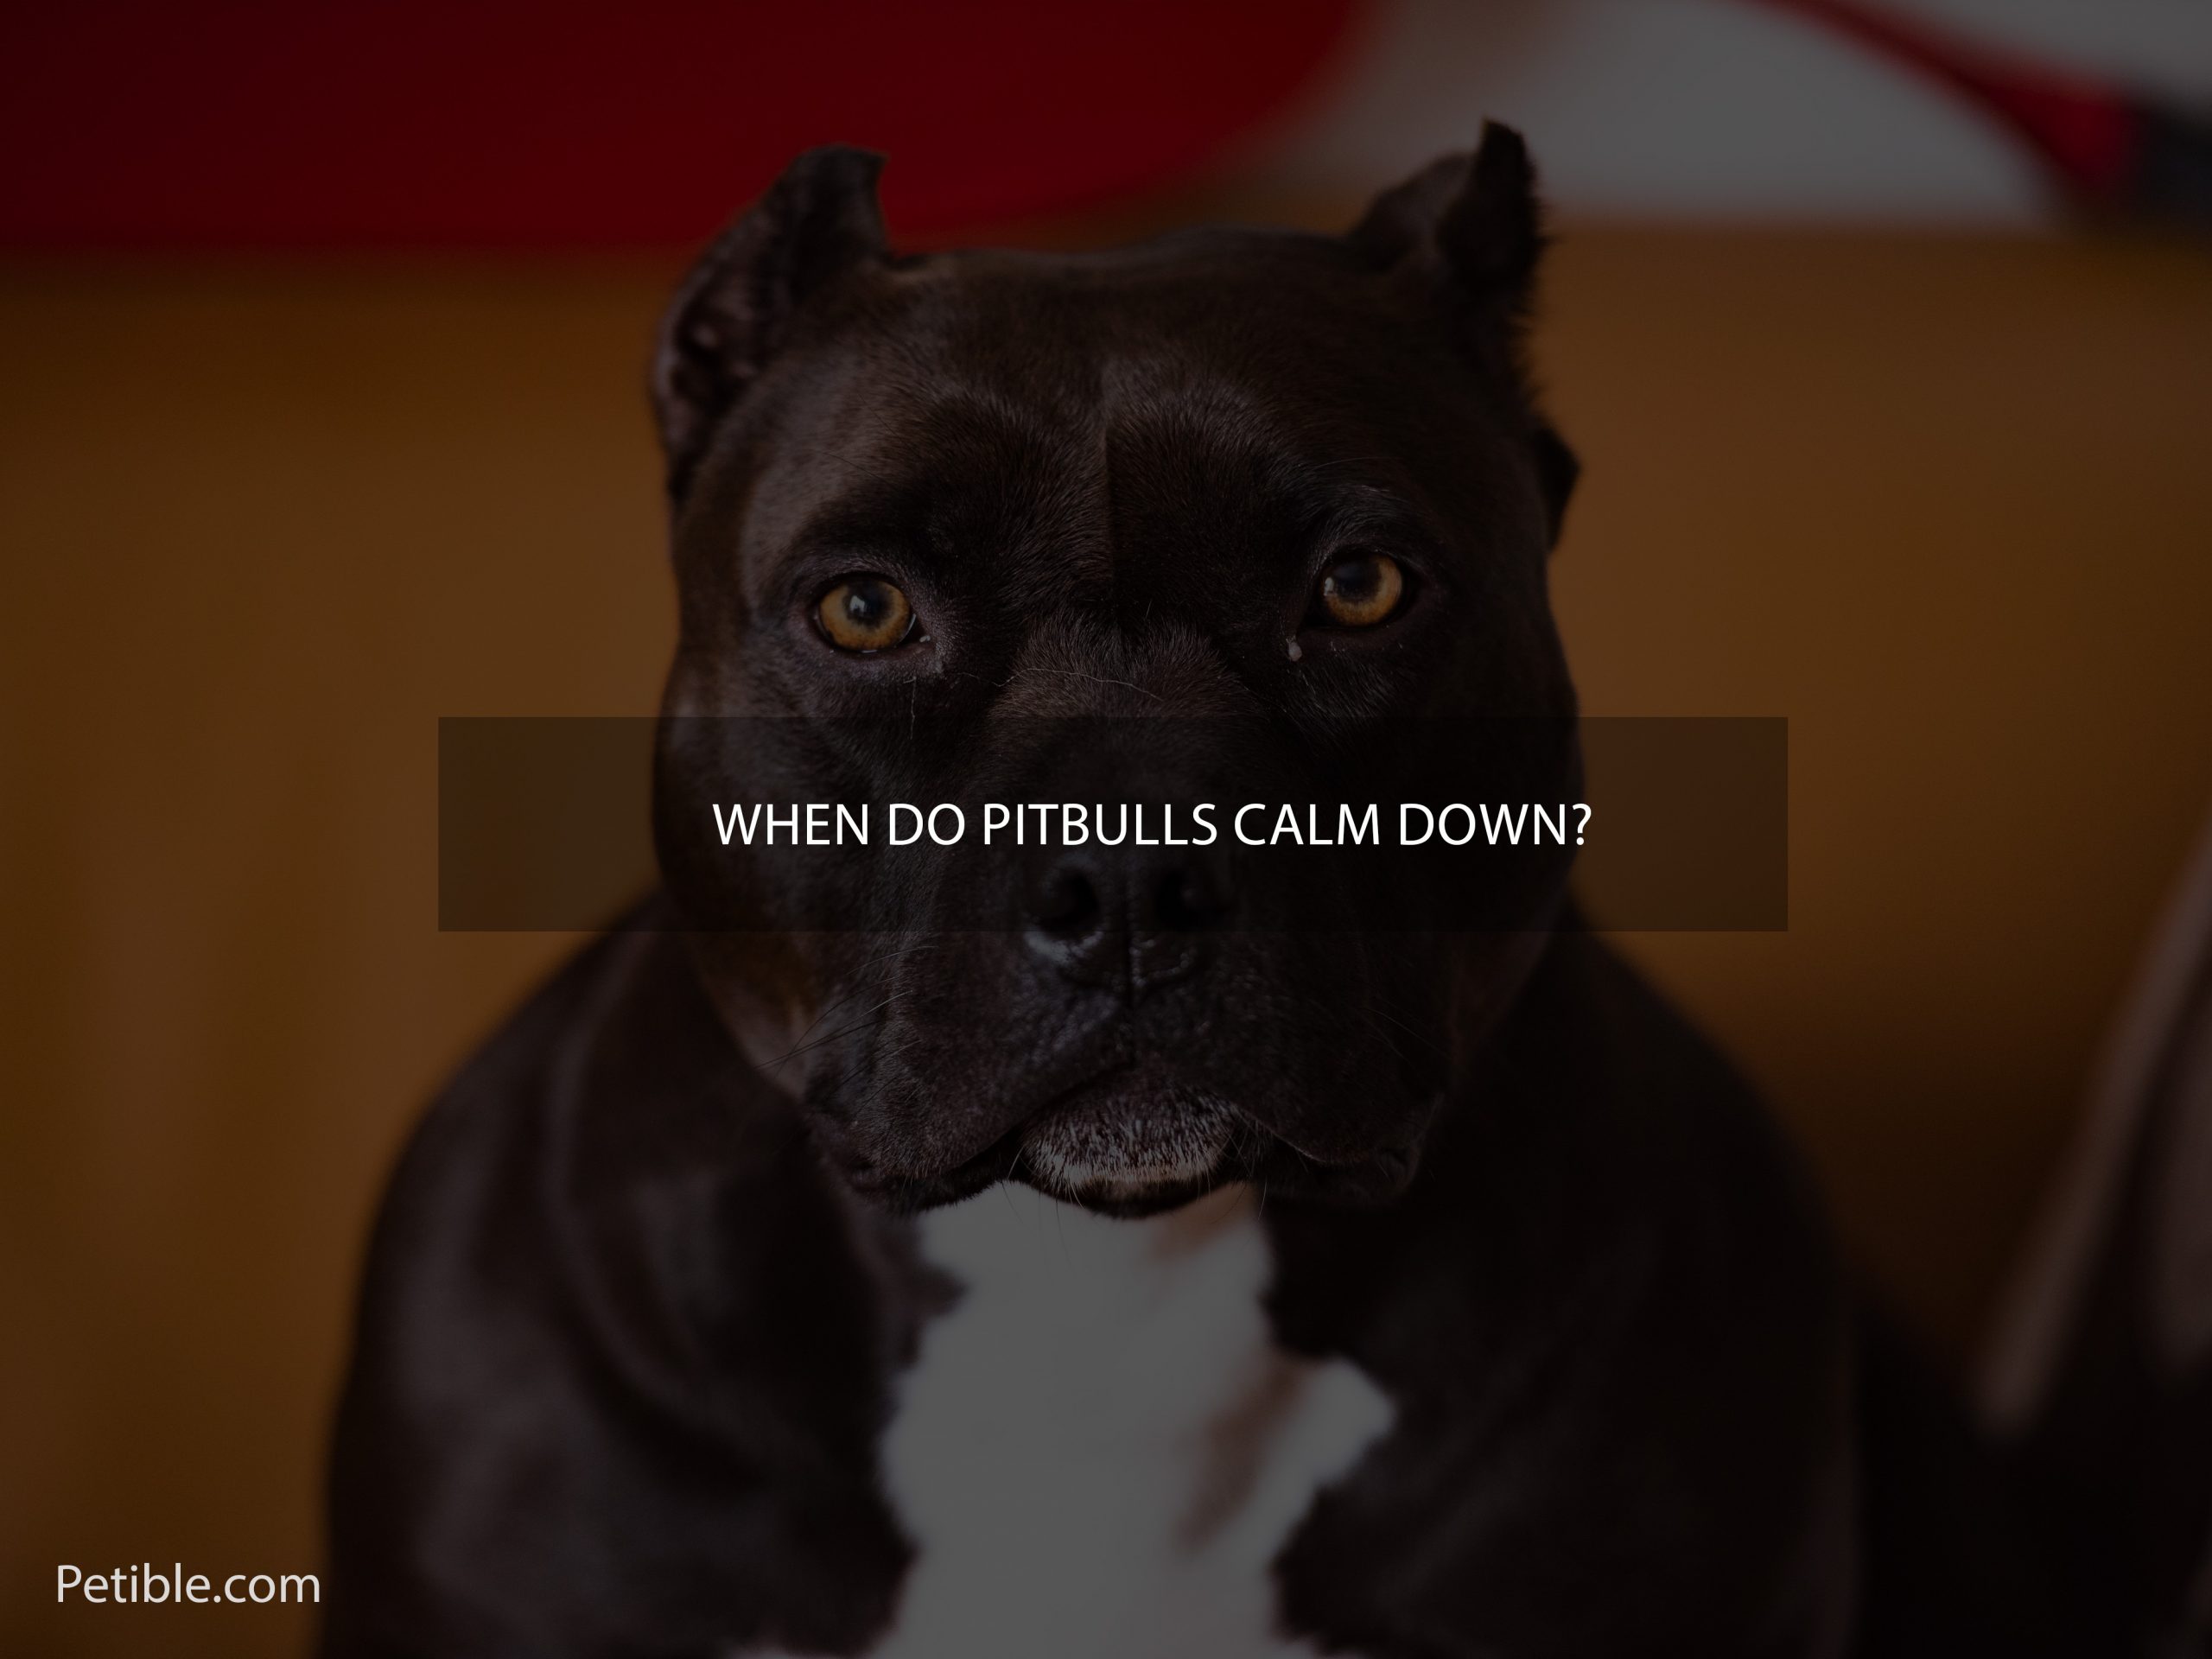 When do Pitbulls calm down?